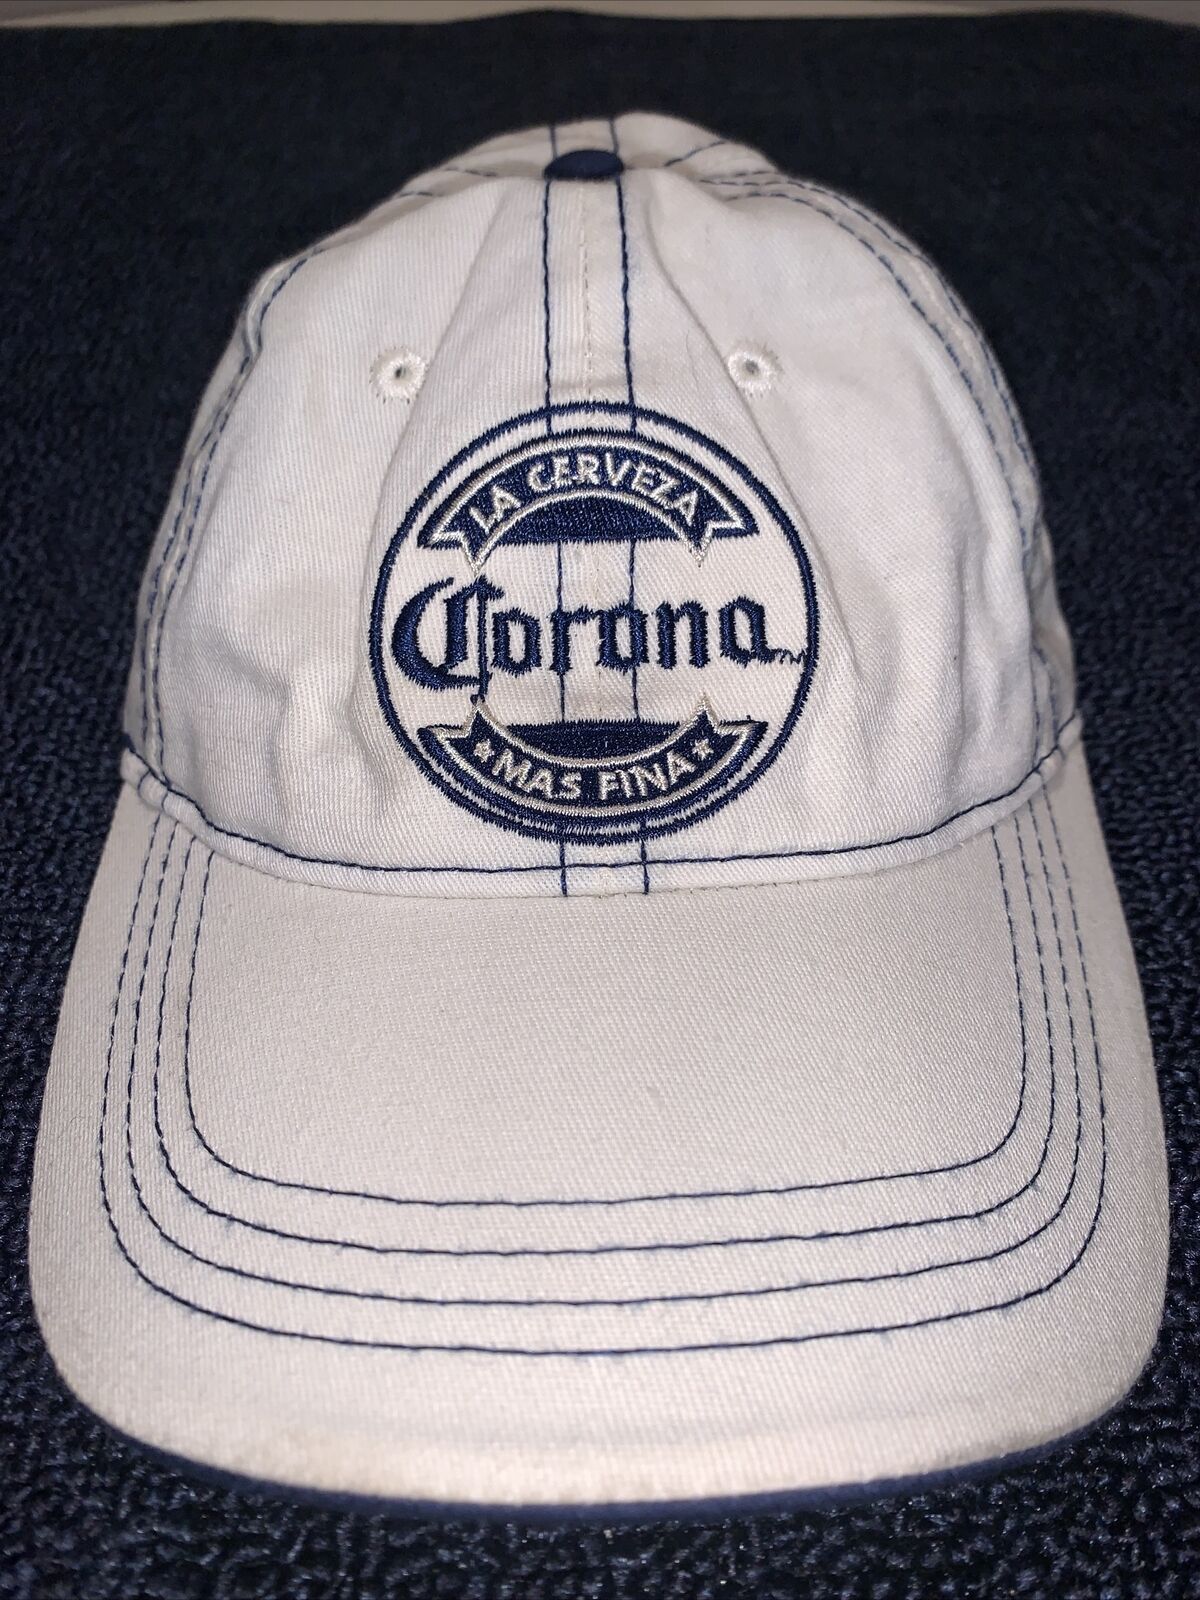 Vintage 2010 Corona Beer Round Logo Cream Color Baseball Cap Hat